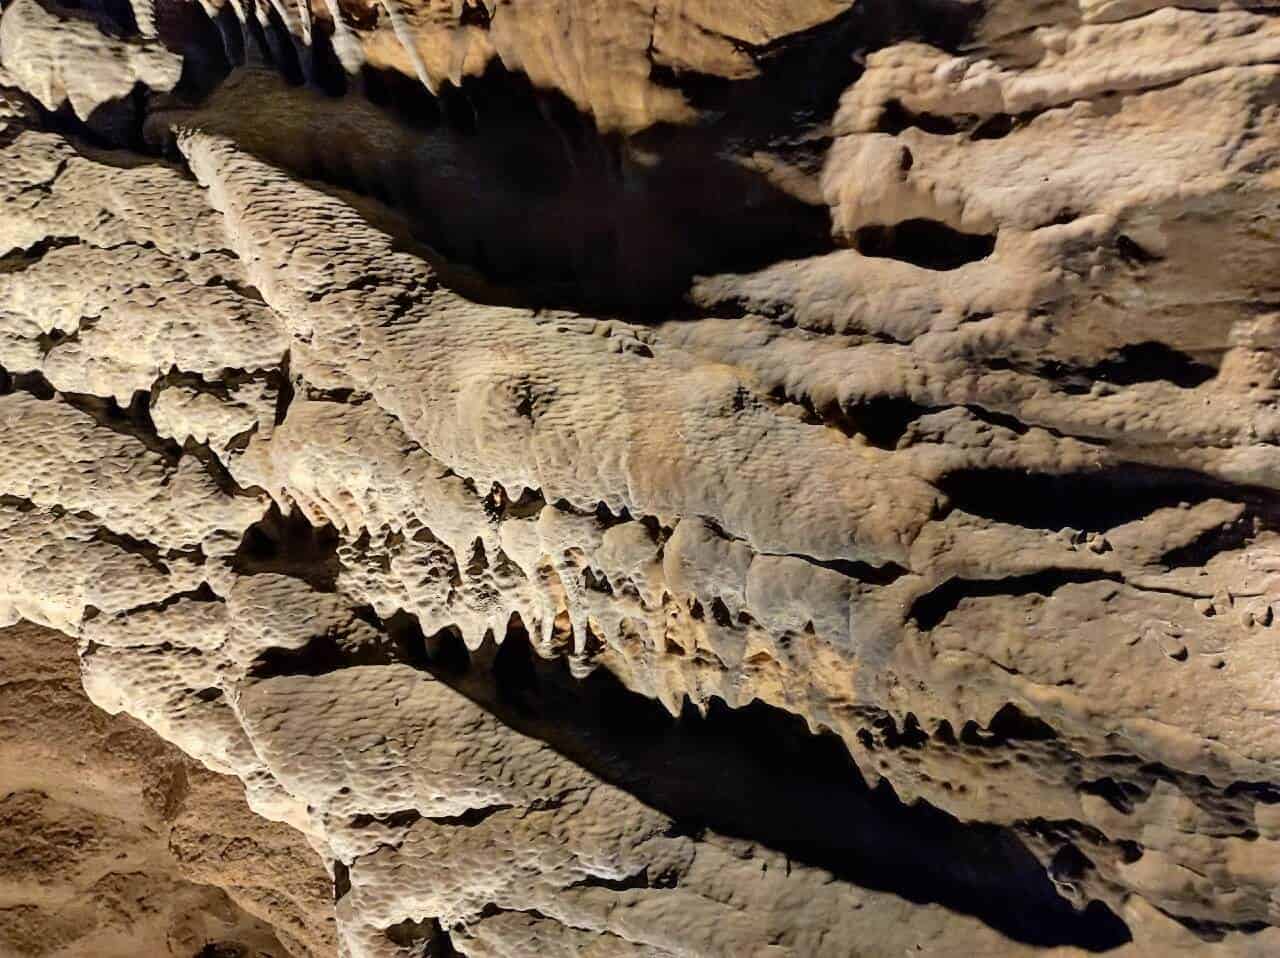 Pál-völgyi-barlang